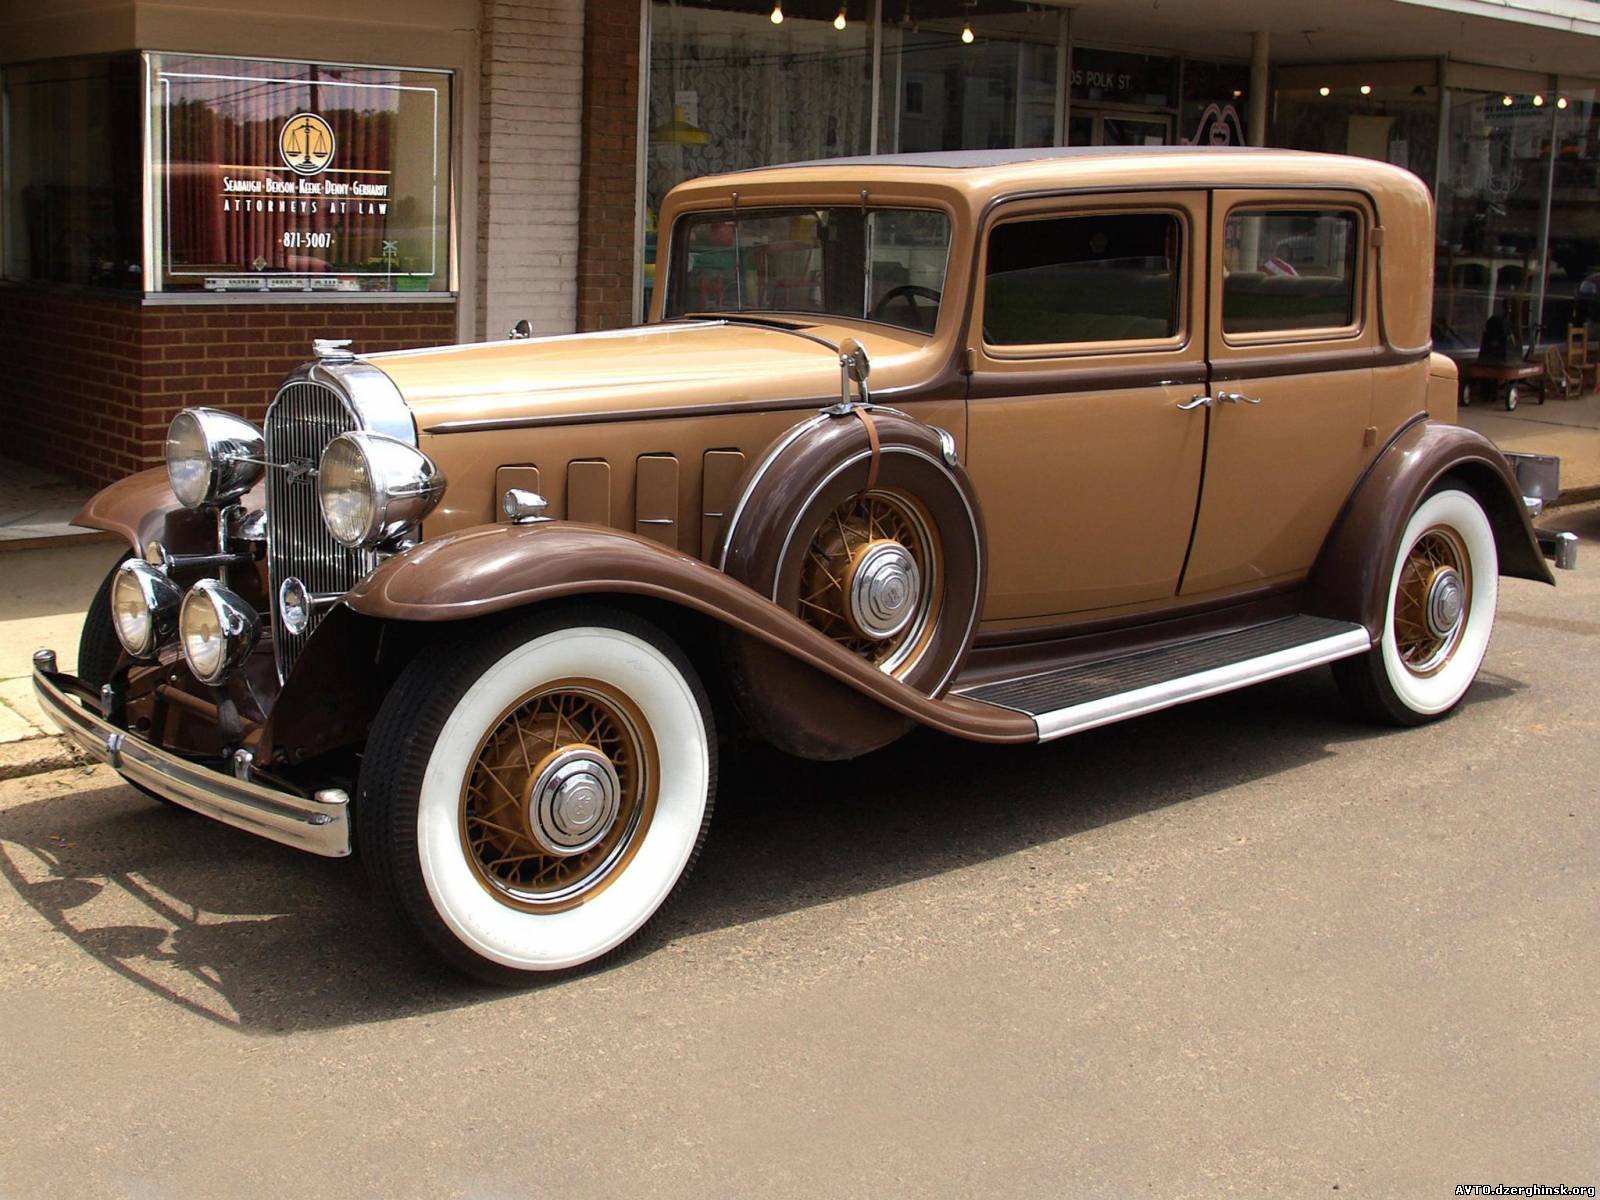 010. Buick Chuck Bidwell’s custom-bodied 1932 90 Series T...